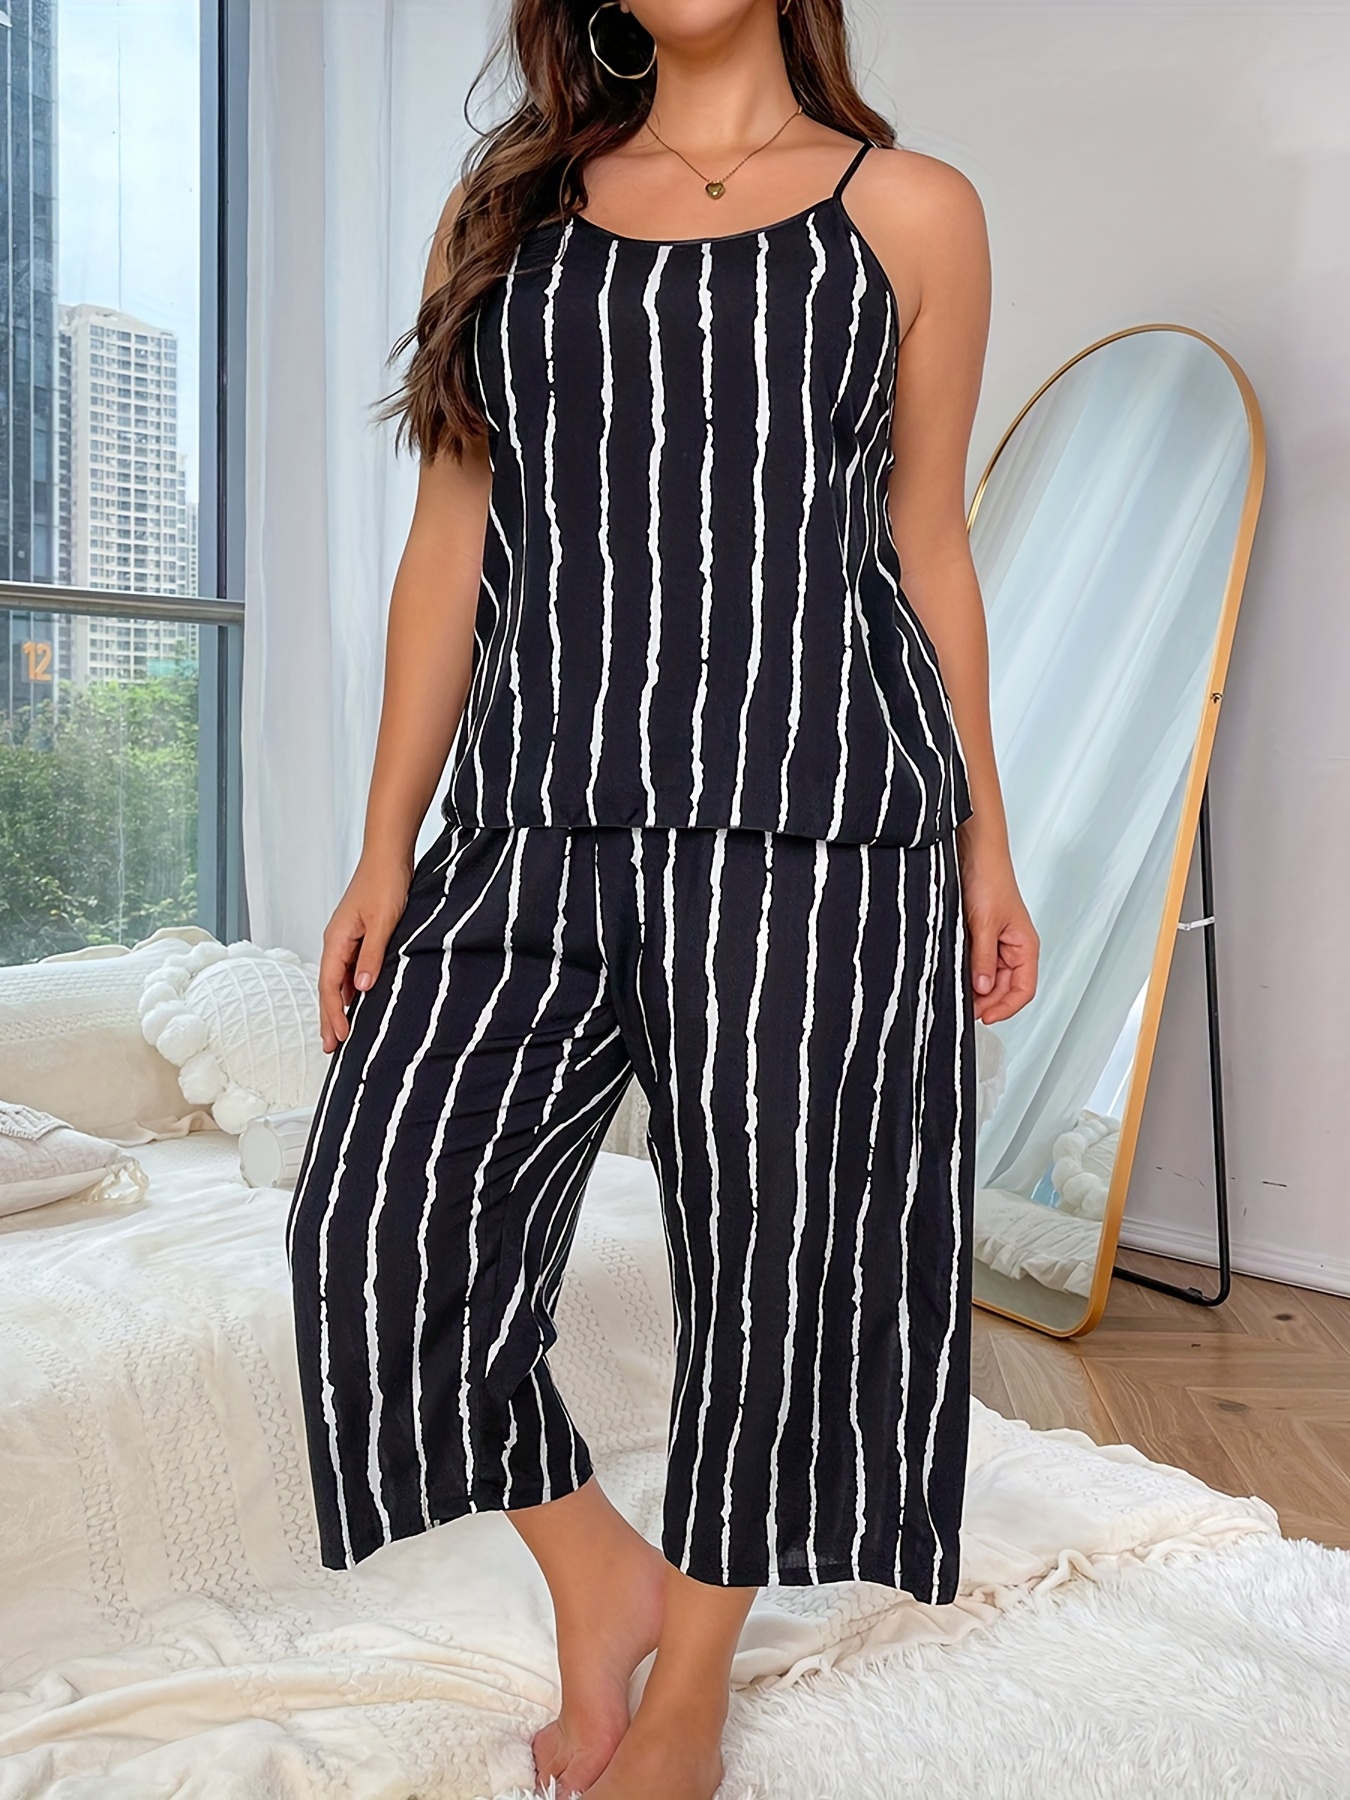 HDE Women’s Capri Pajama Pants Sleepwear Sleep Pants Medium Black